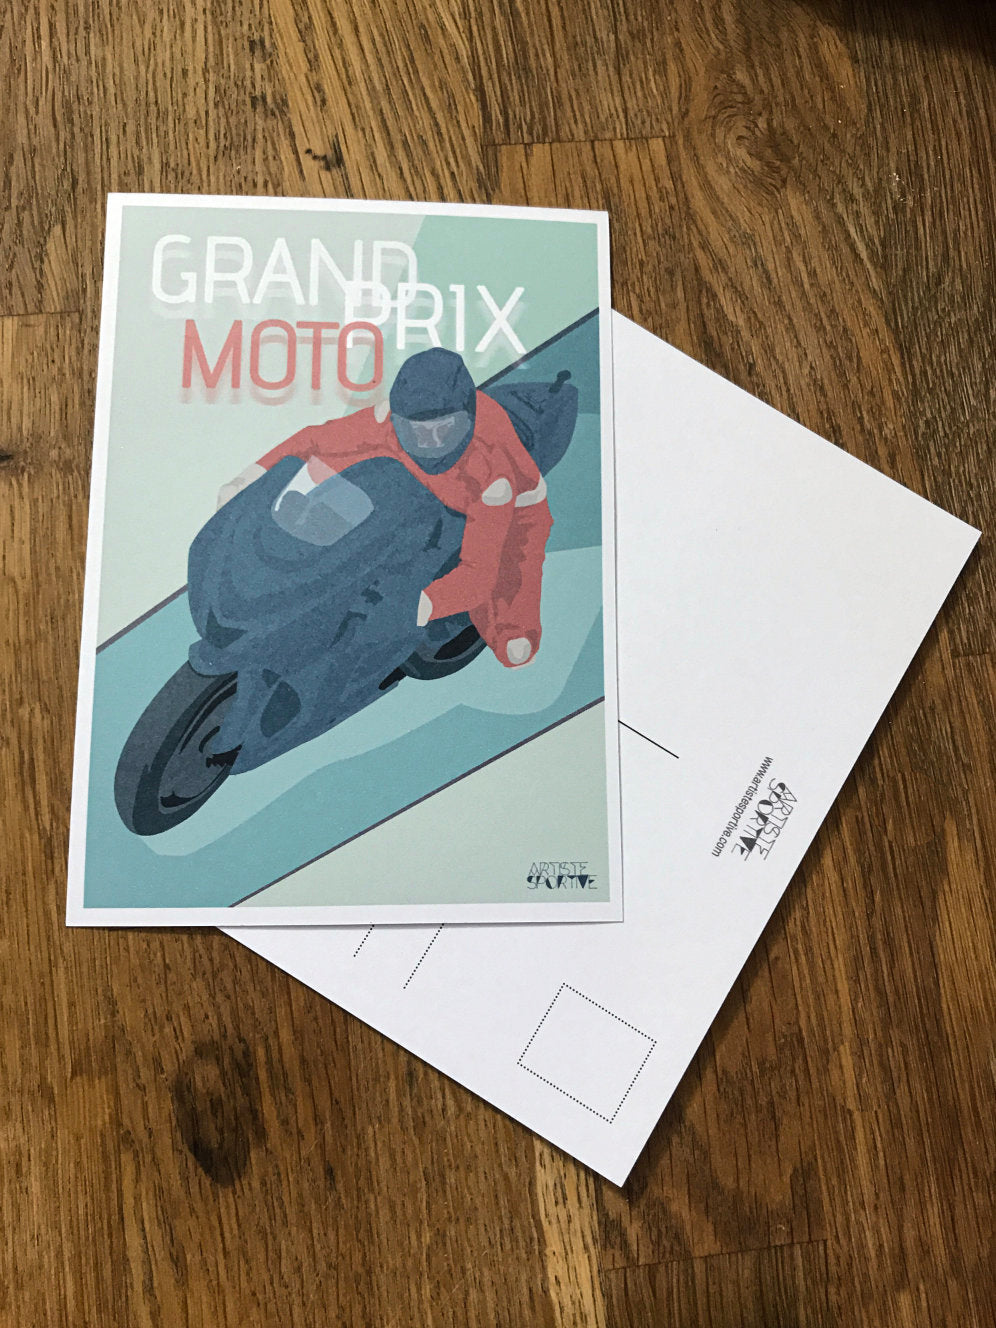 “Moto GP” poster